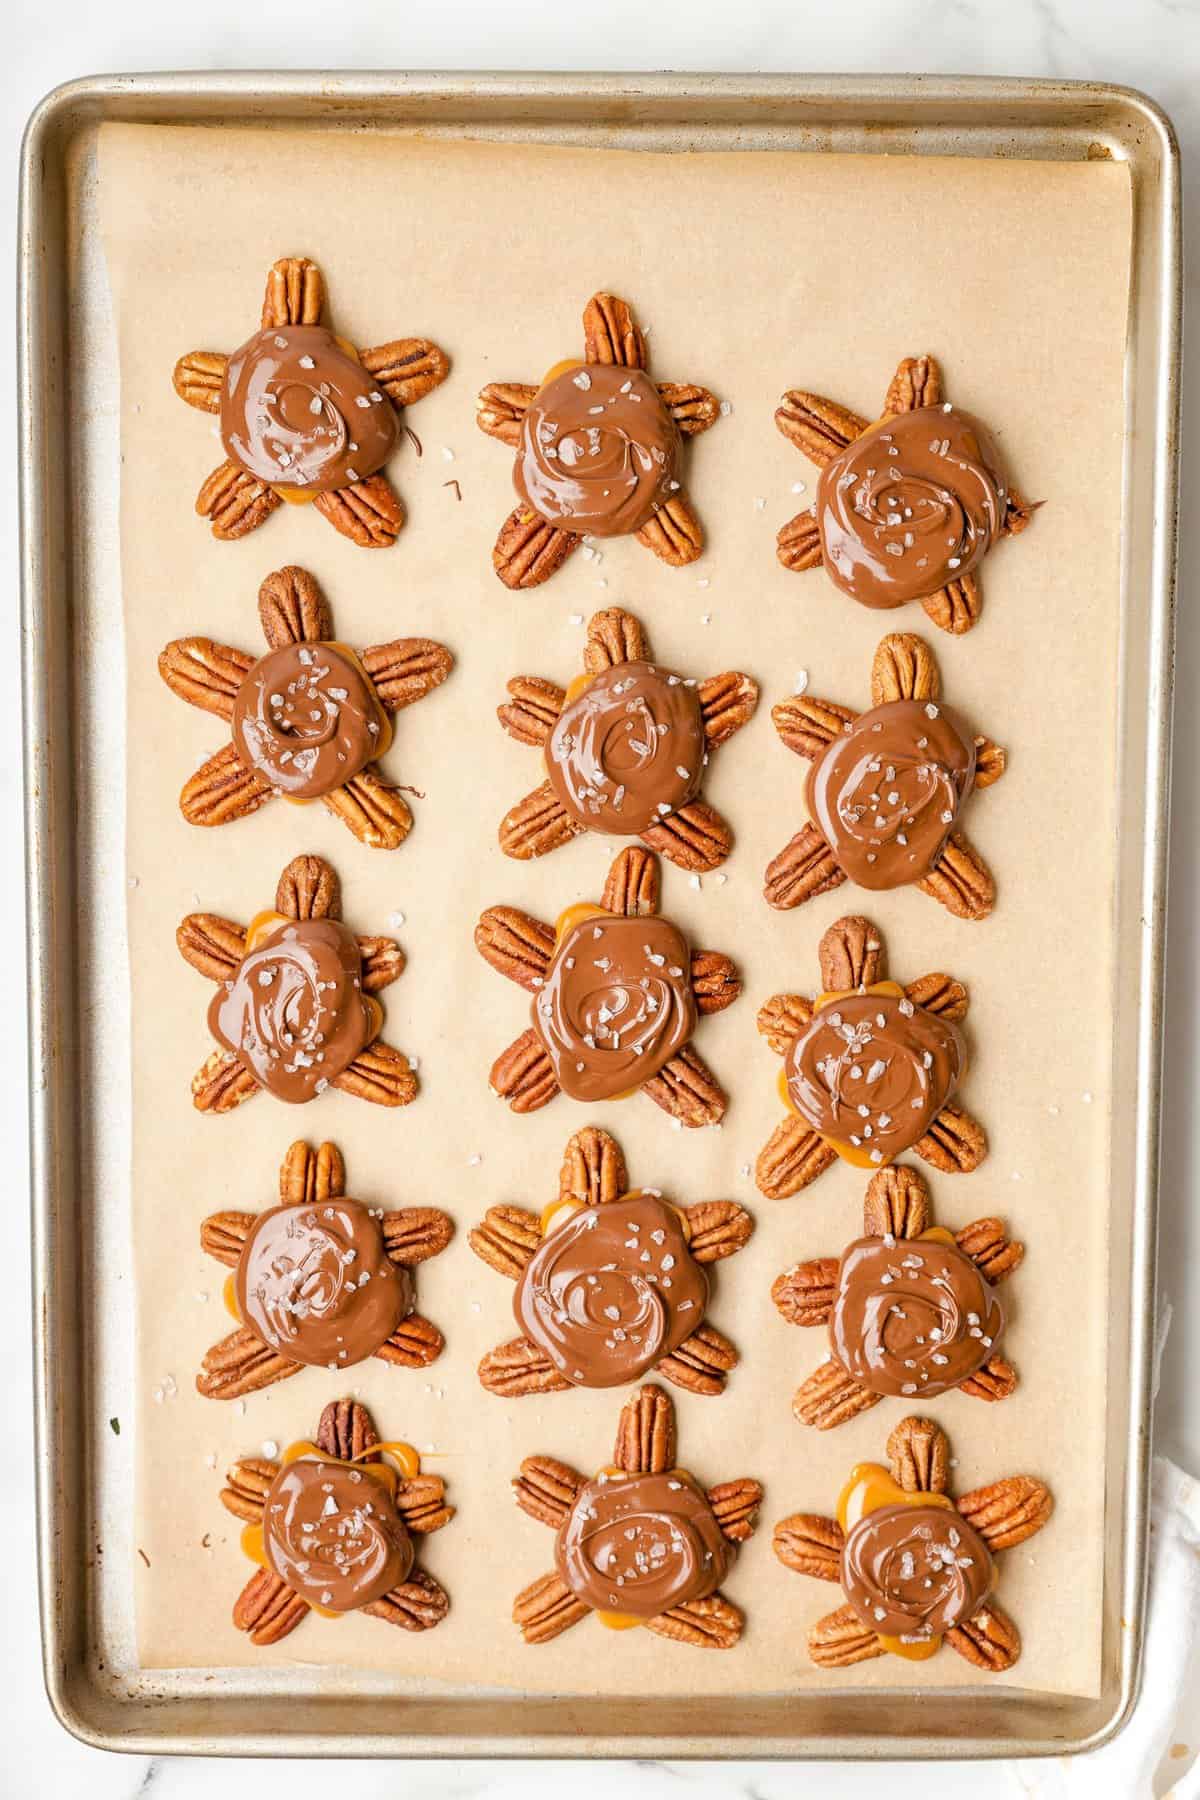 Overhead image of chocolate turtles on baking sheet